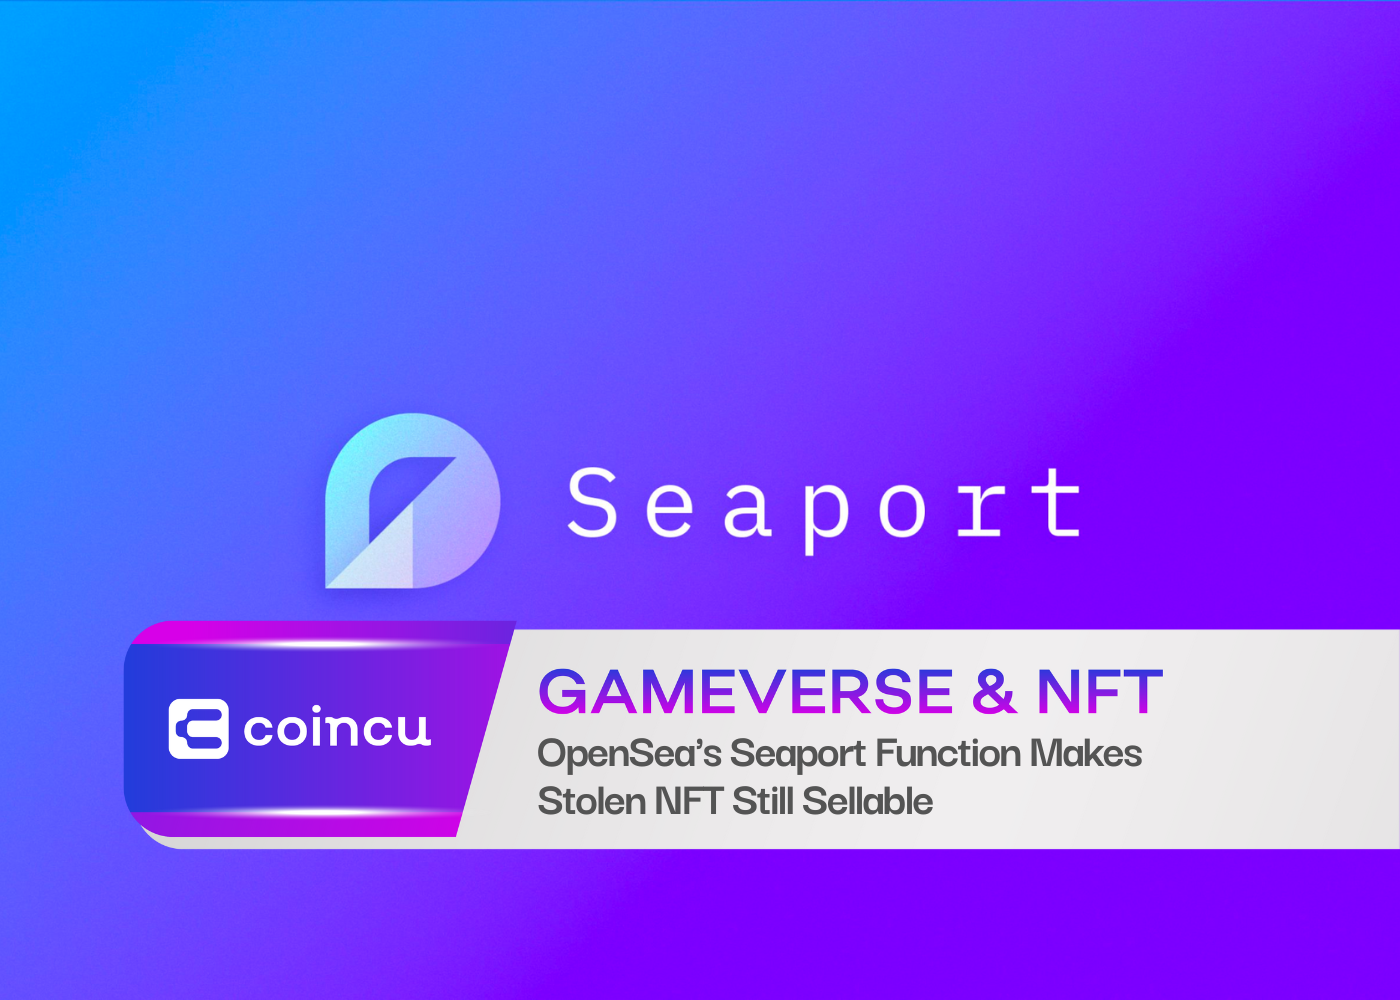 OpenSea's Seaport Function Makes Stolen NFT Still Sellable